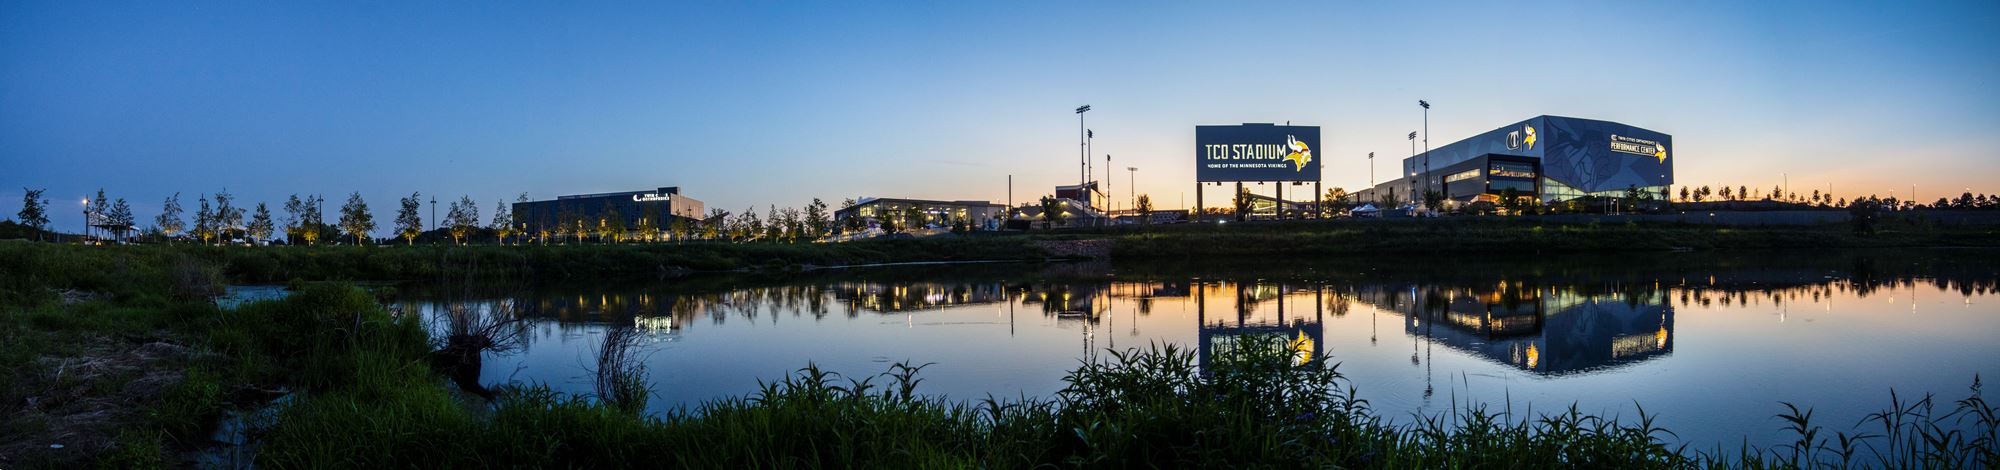 Minnesota Vikings Headquarters: Practice Facility and Vikings Lake Development Receives Honor Award 